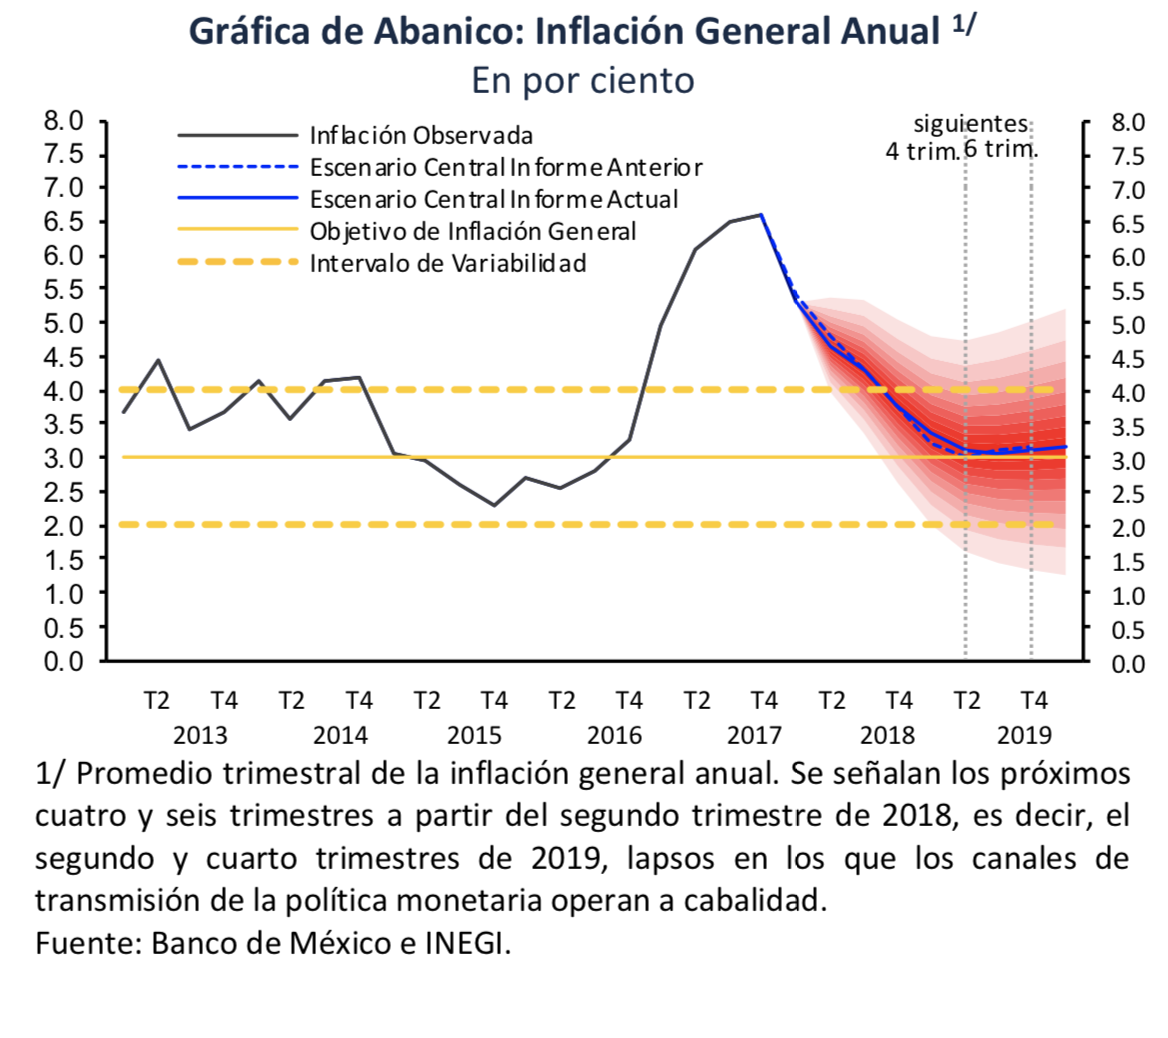 Banxico, optimista sobre inflación general anual